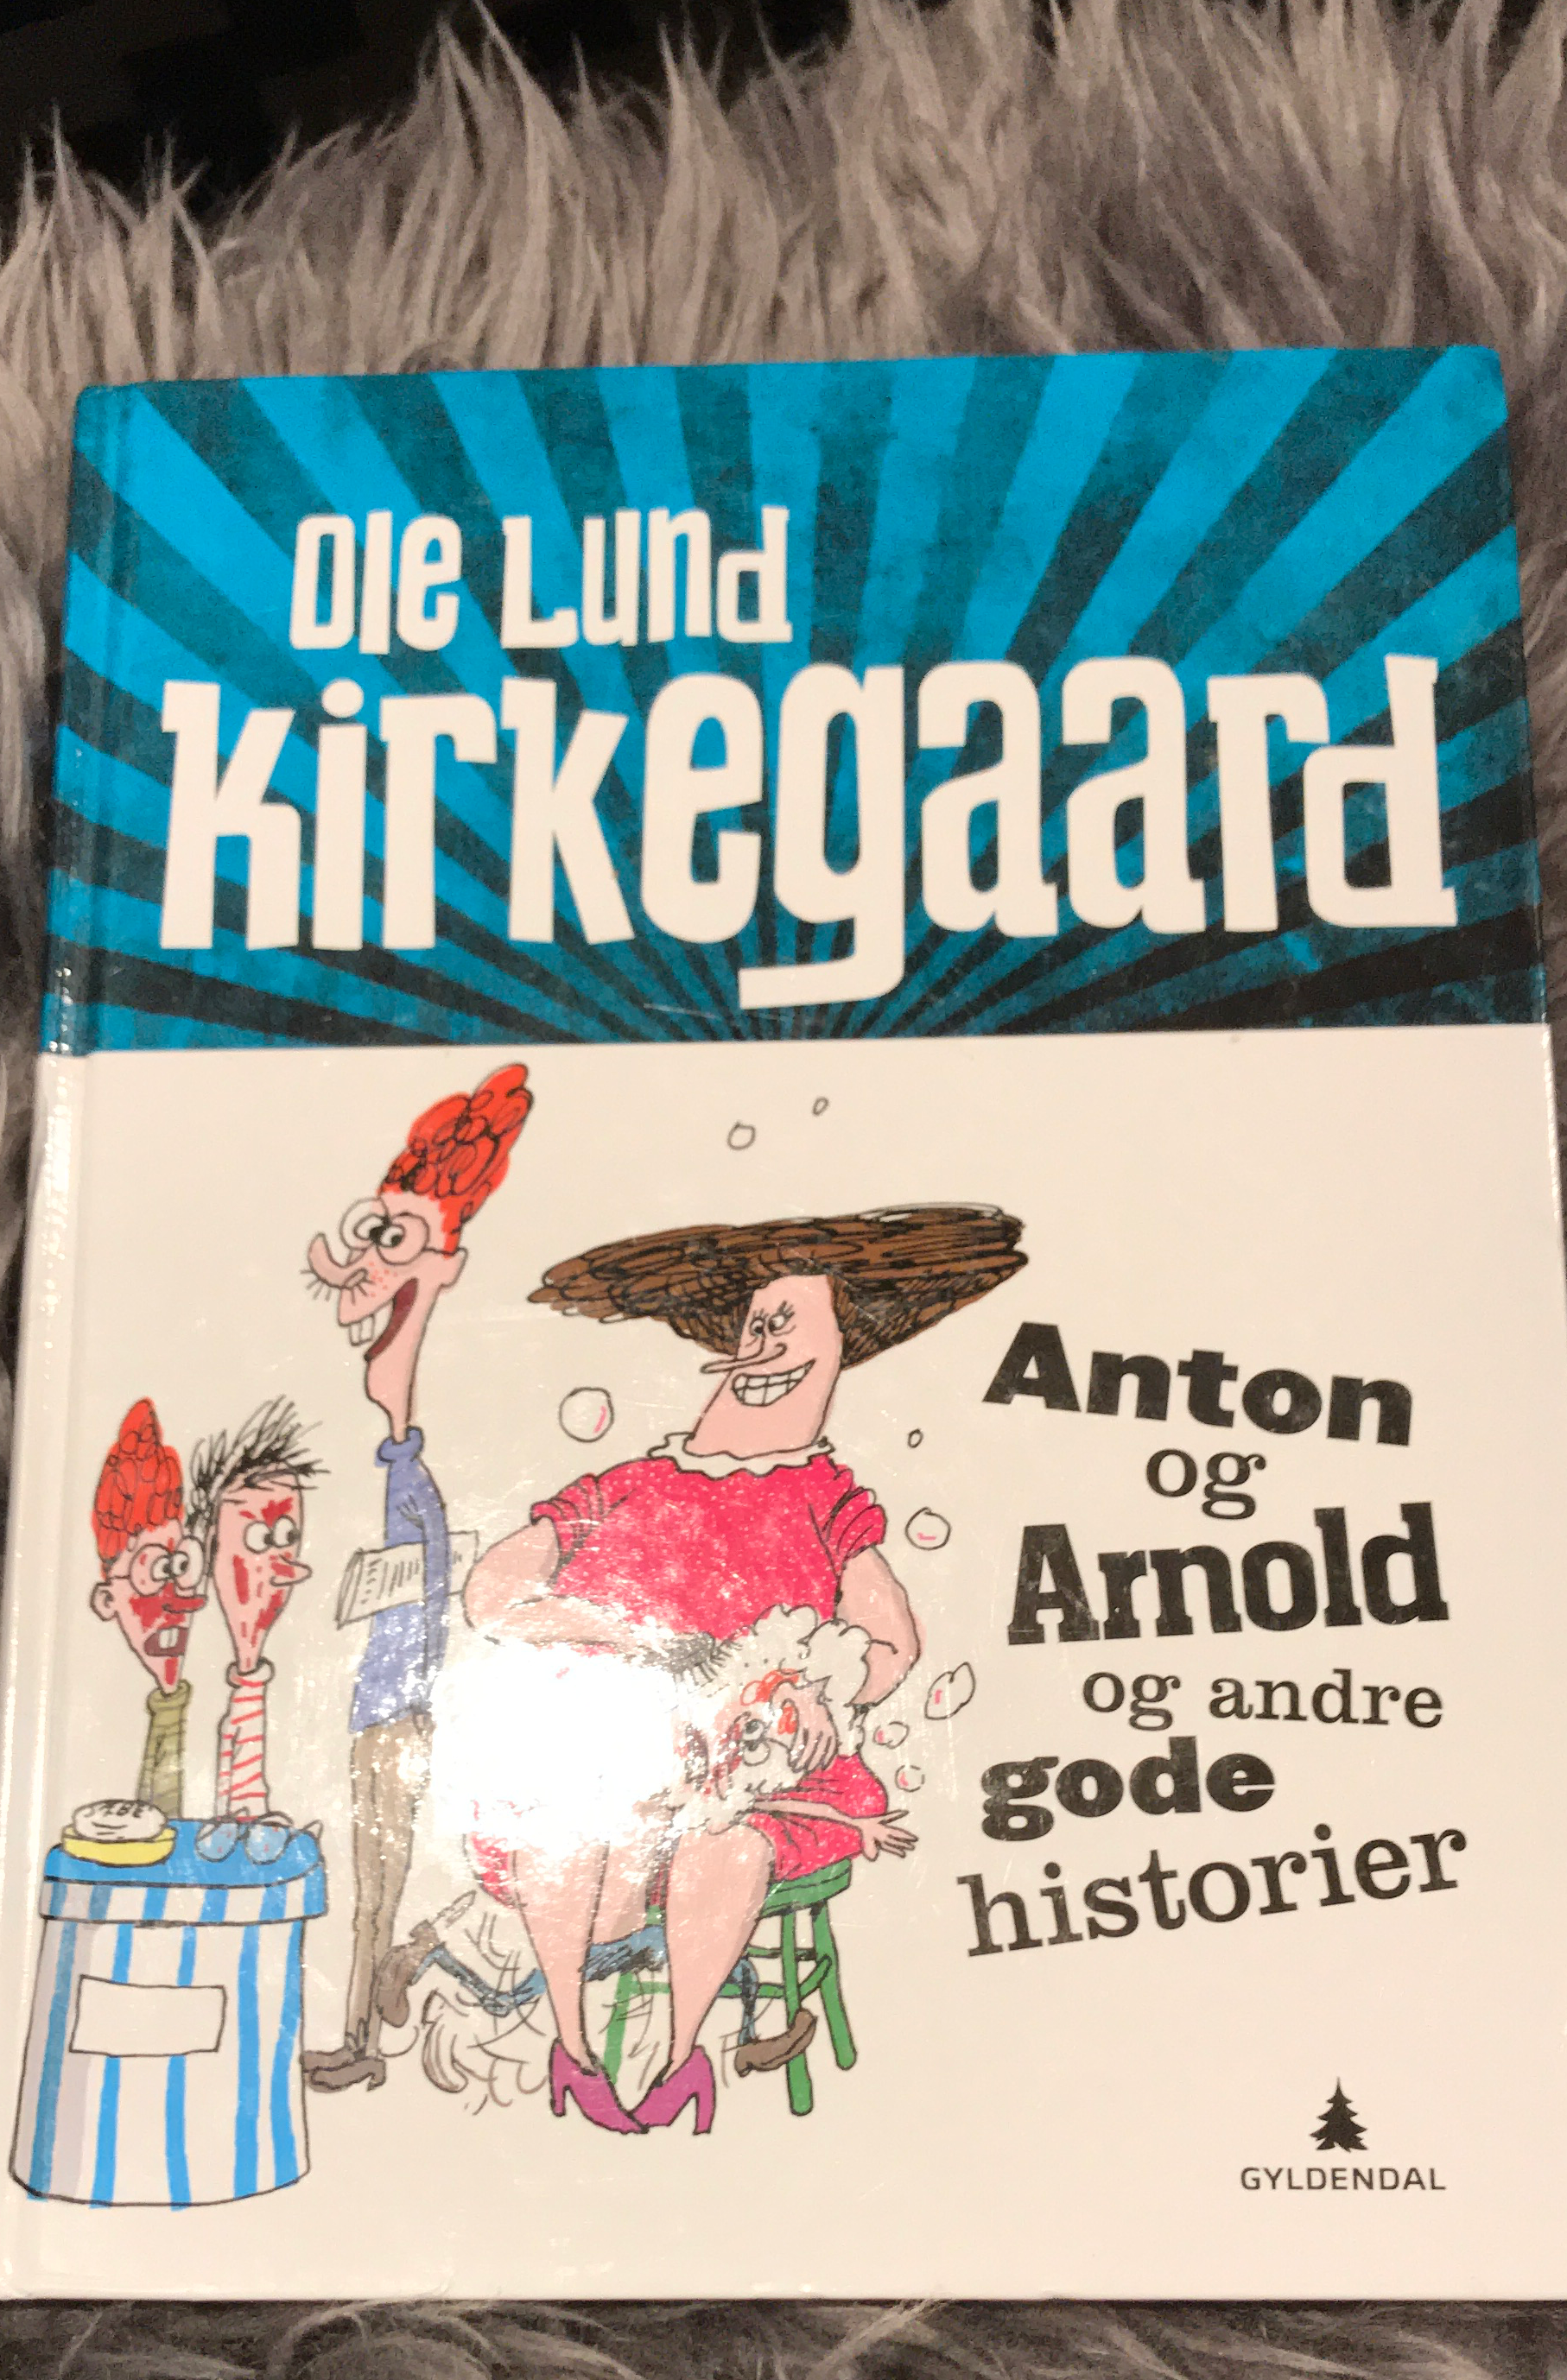 Anton, Arnold og andre gode historier